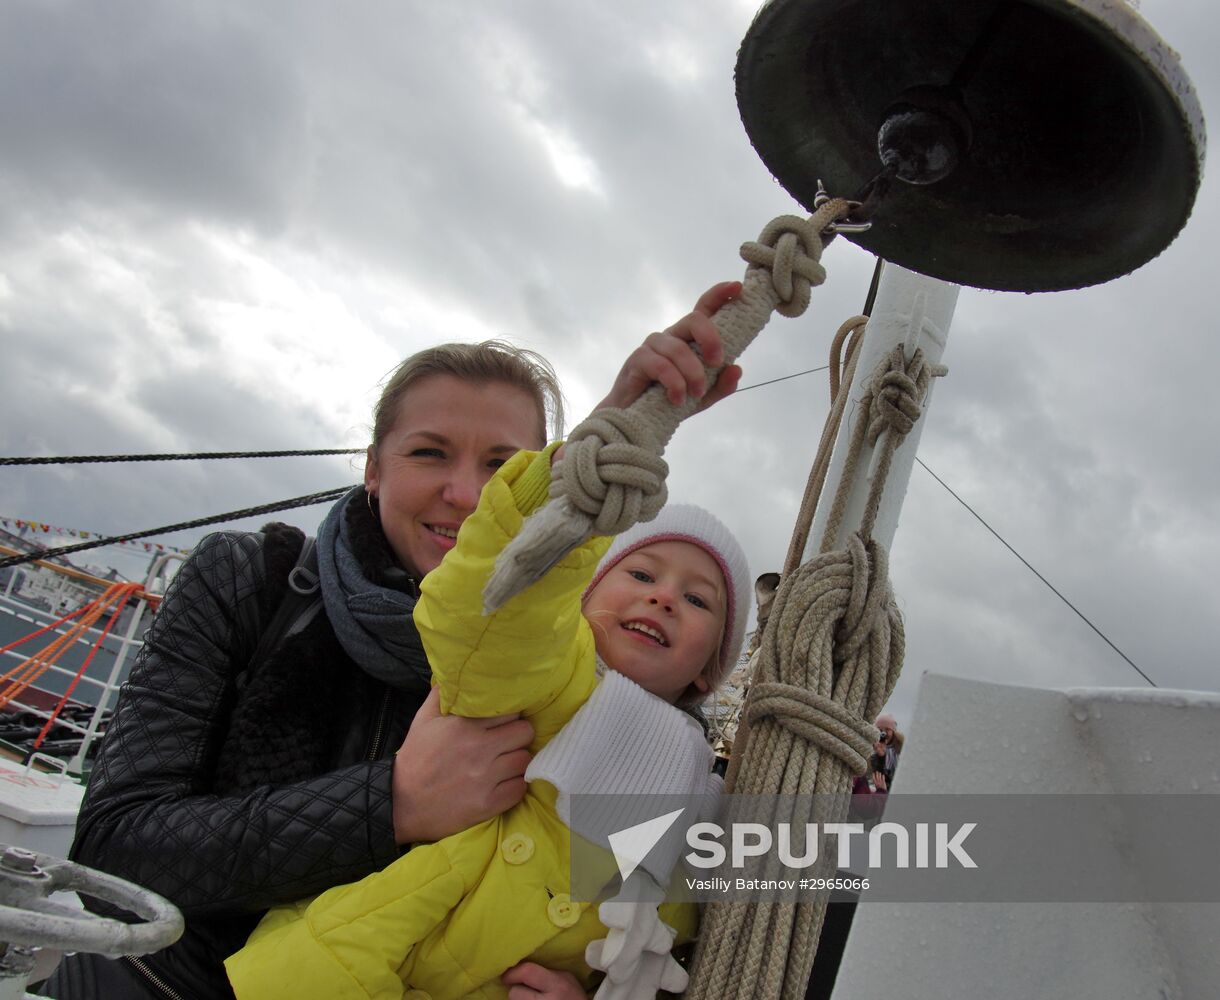 Celebrations of the Navy's 320th anniversary in Sevastopol